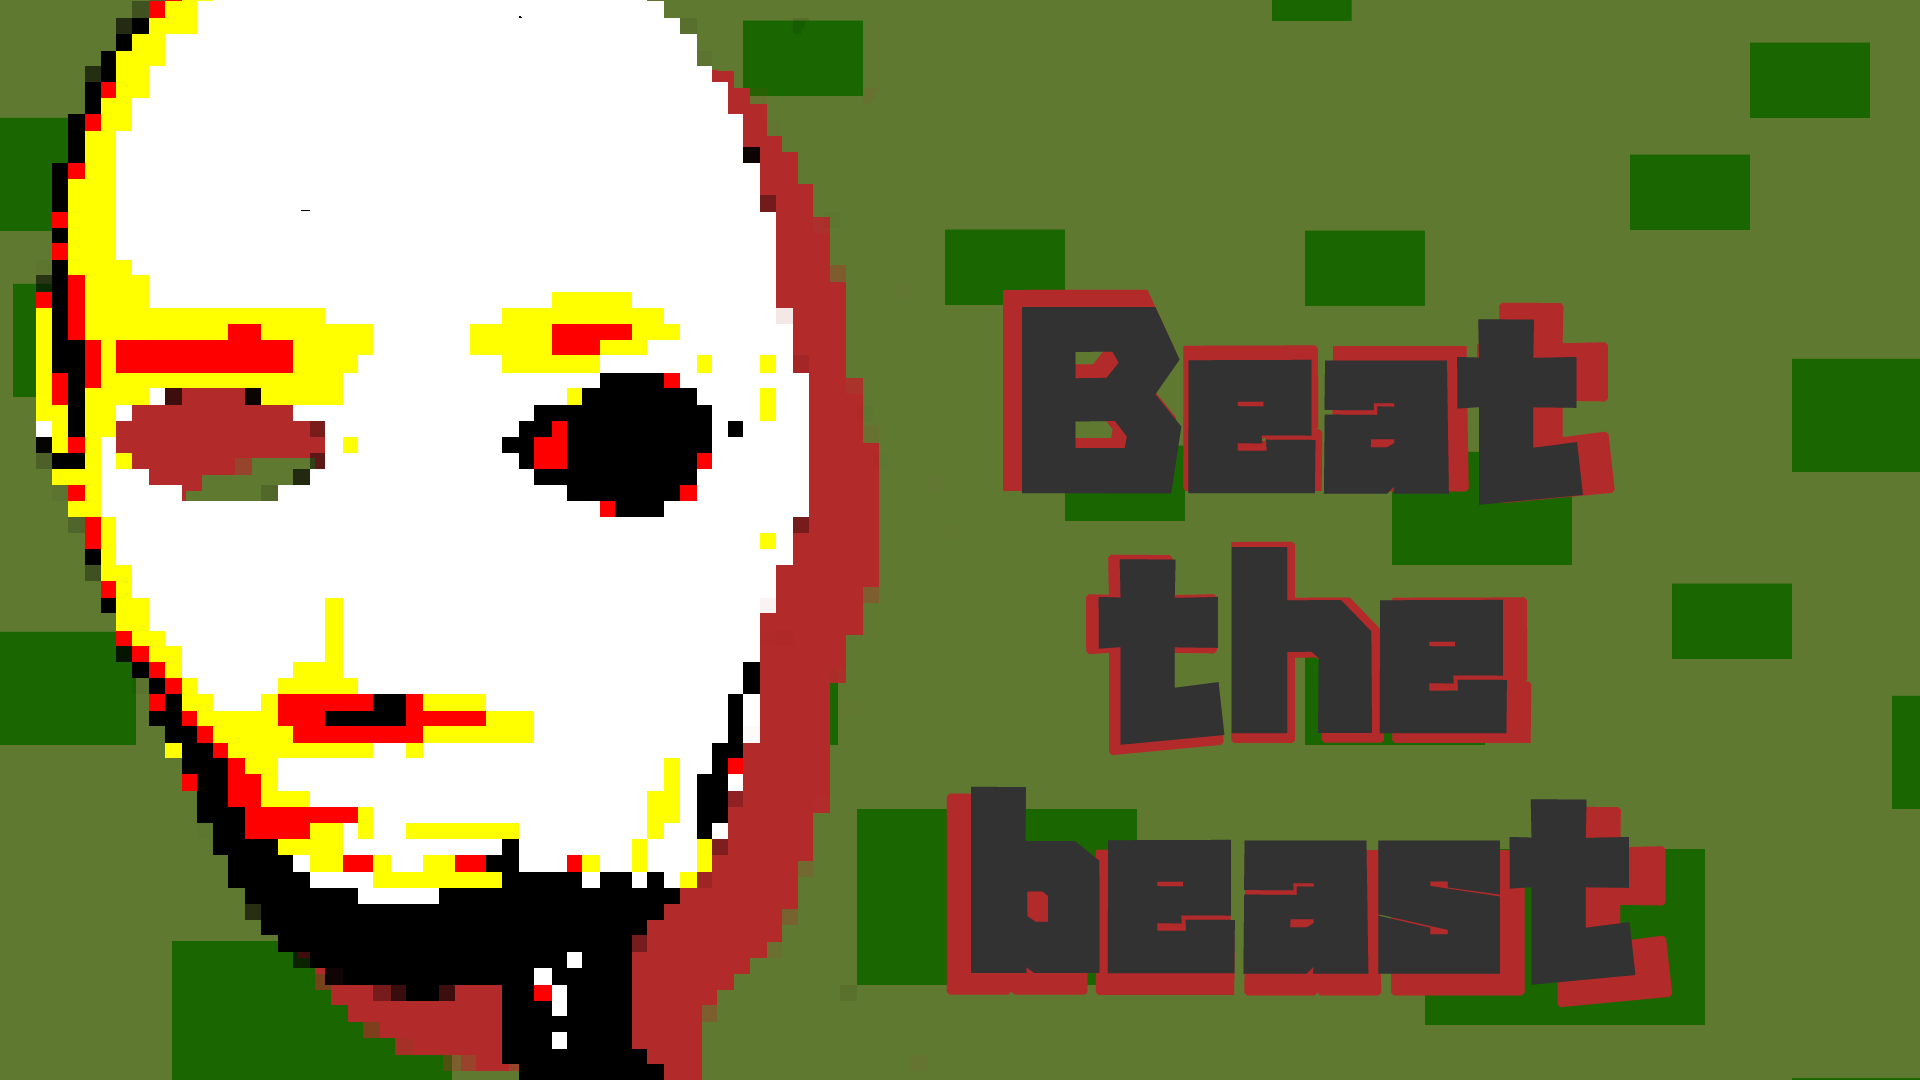 Beat the beast